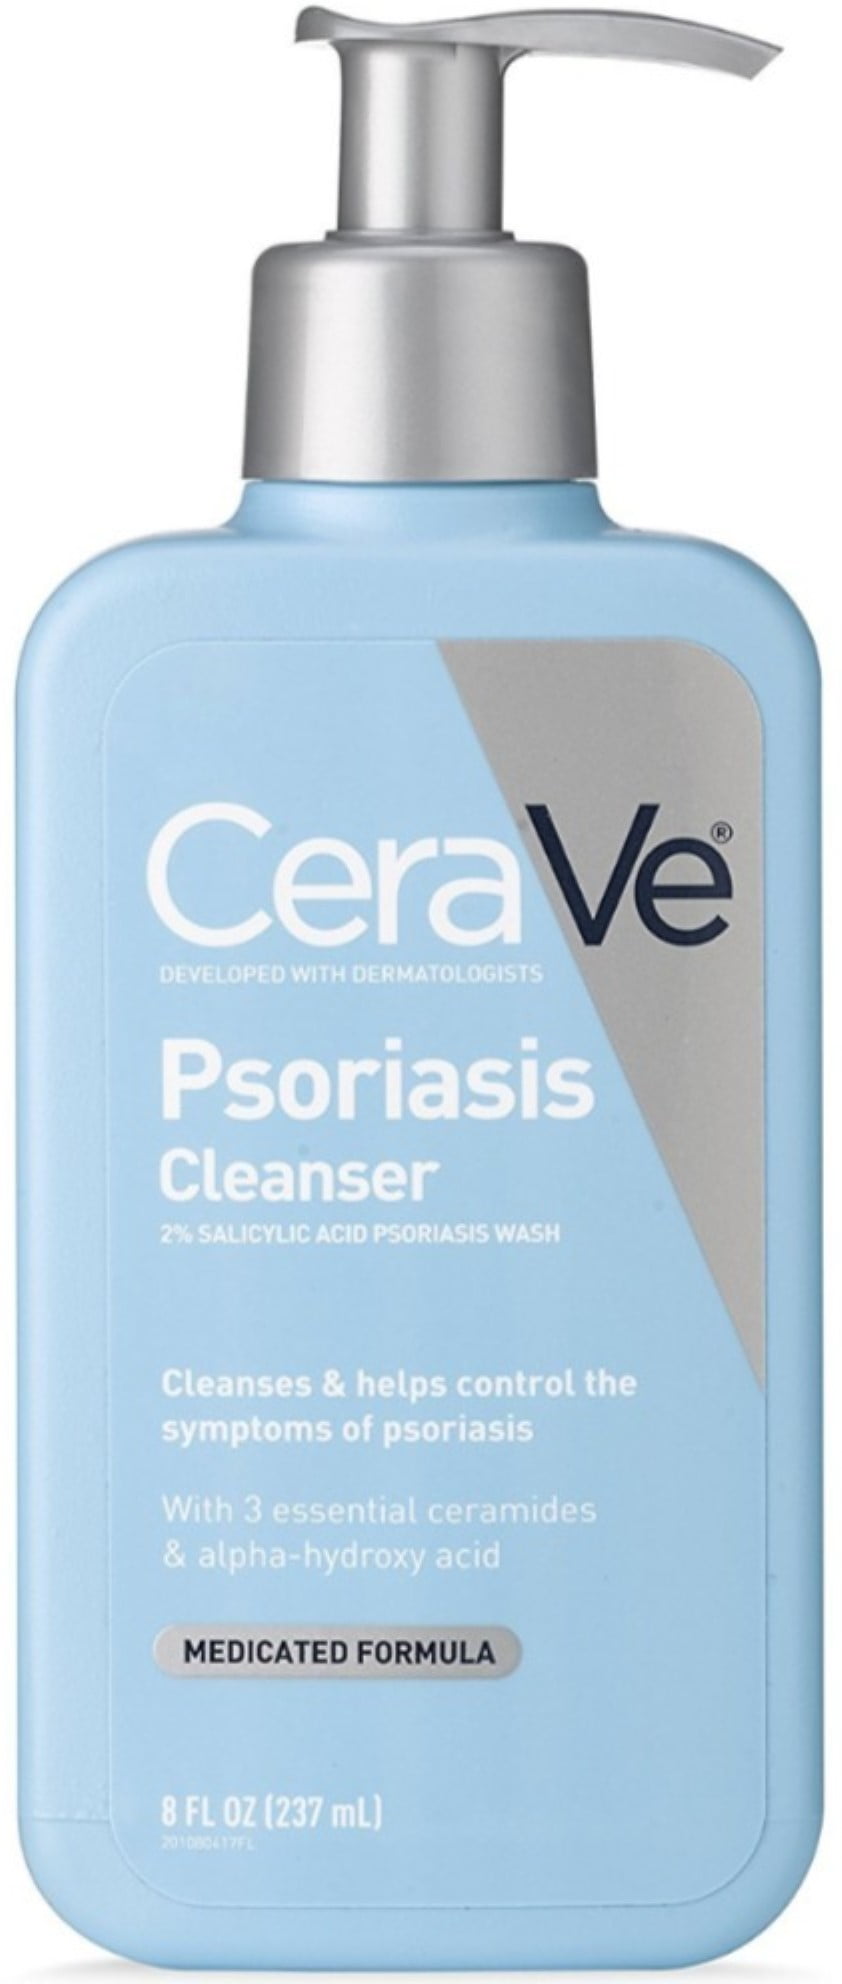 cerave psoriasis cleanser review kenőcs pikkelysömör ekcéma esetén